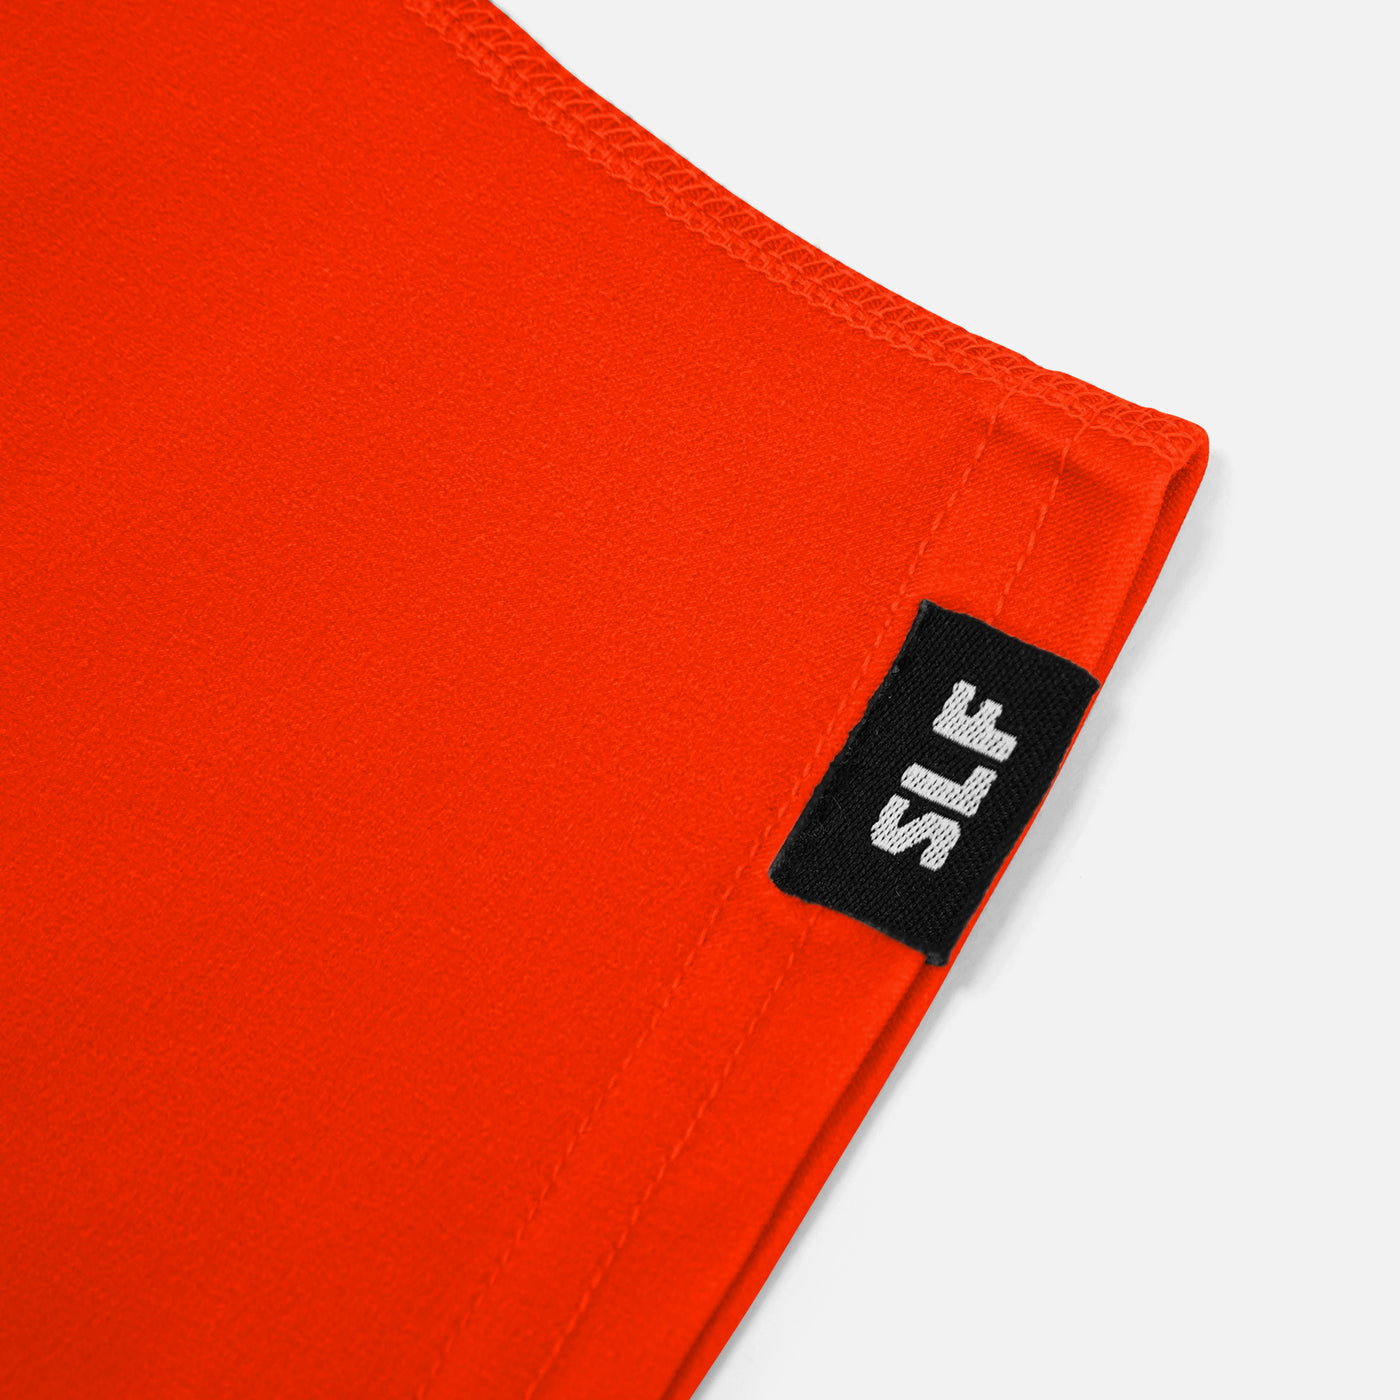 Hue Orange Kids Spats / Cleat Covers